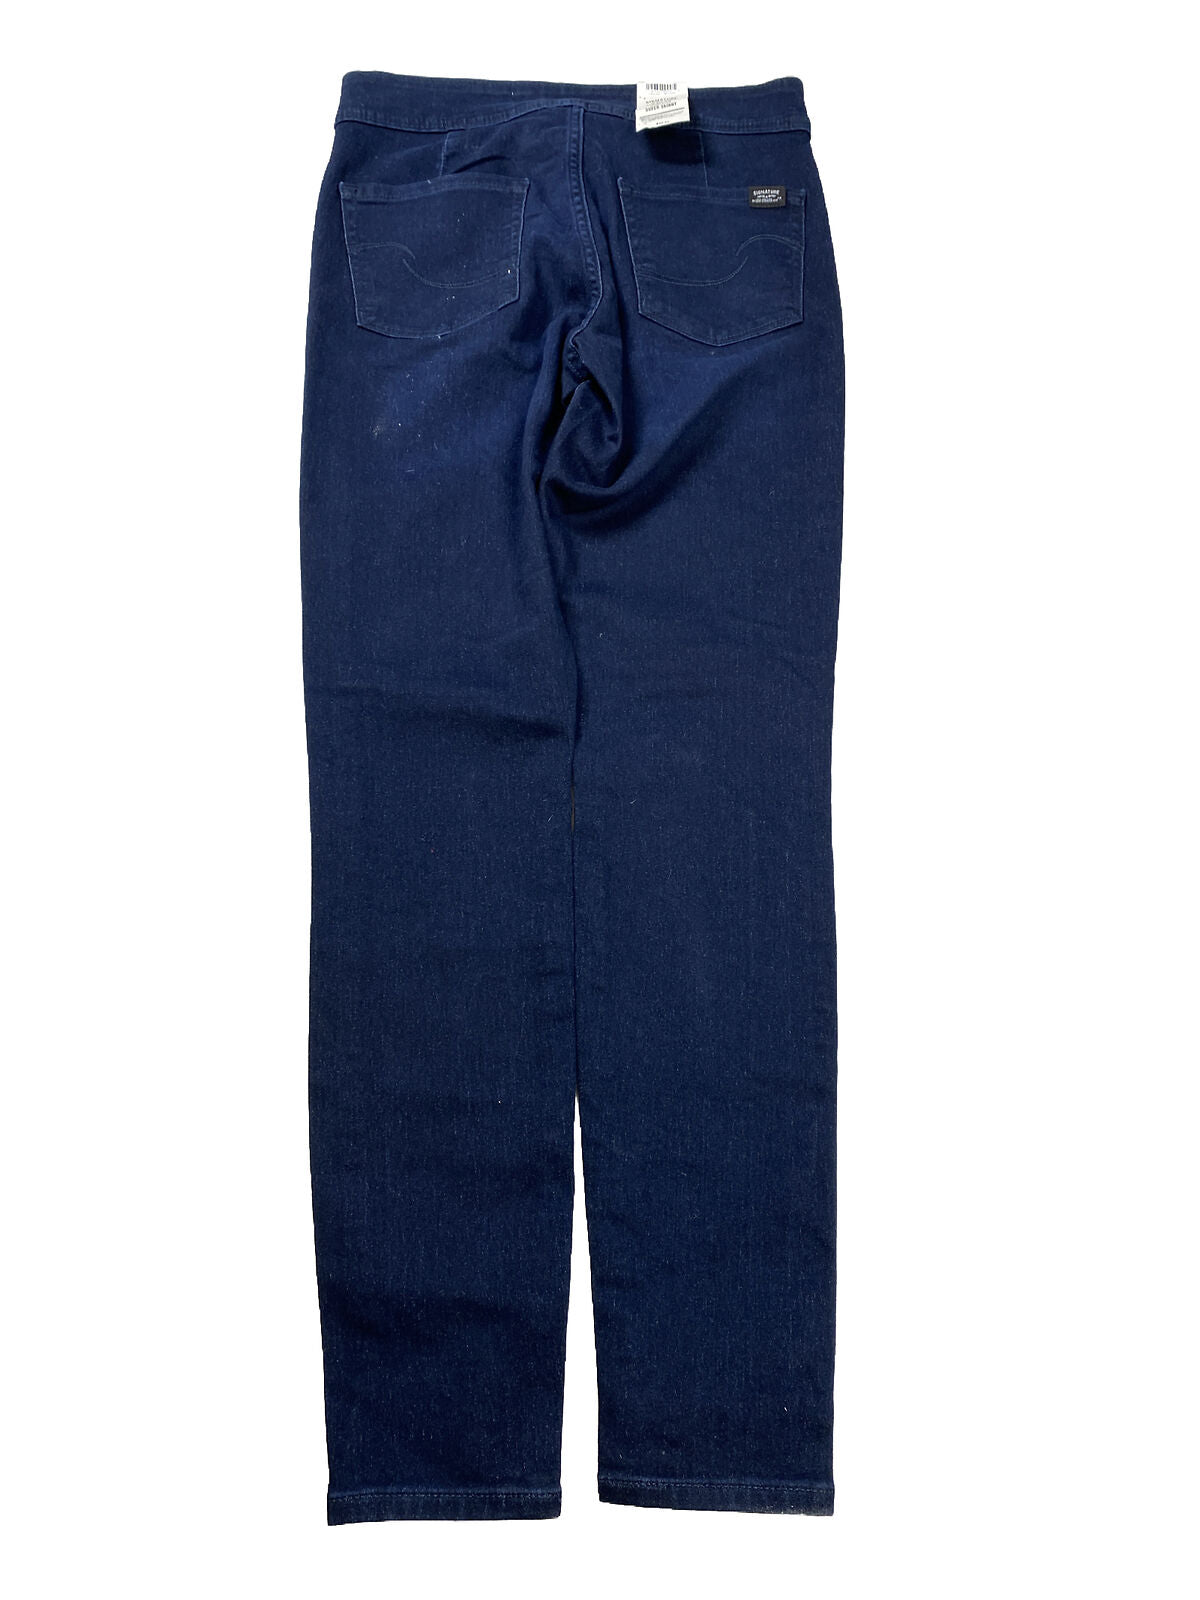 NEW Levi's Signature Women's Dark Wash High Rise Super Skinny Jeans - 6